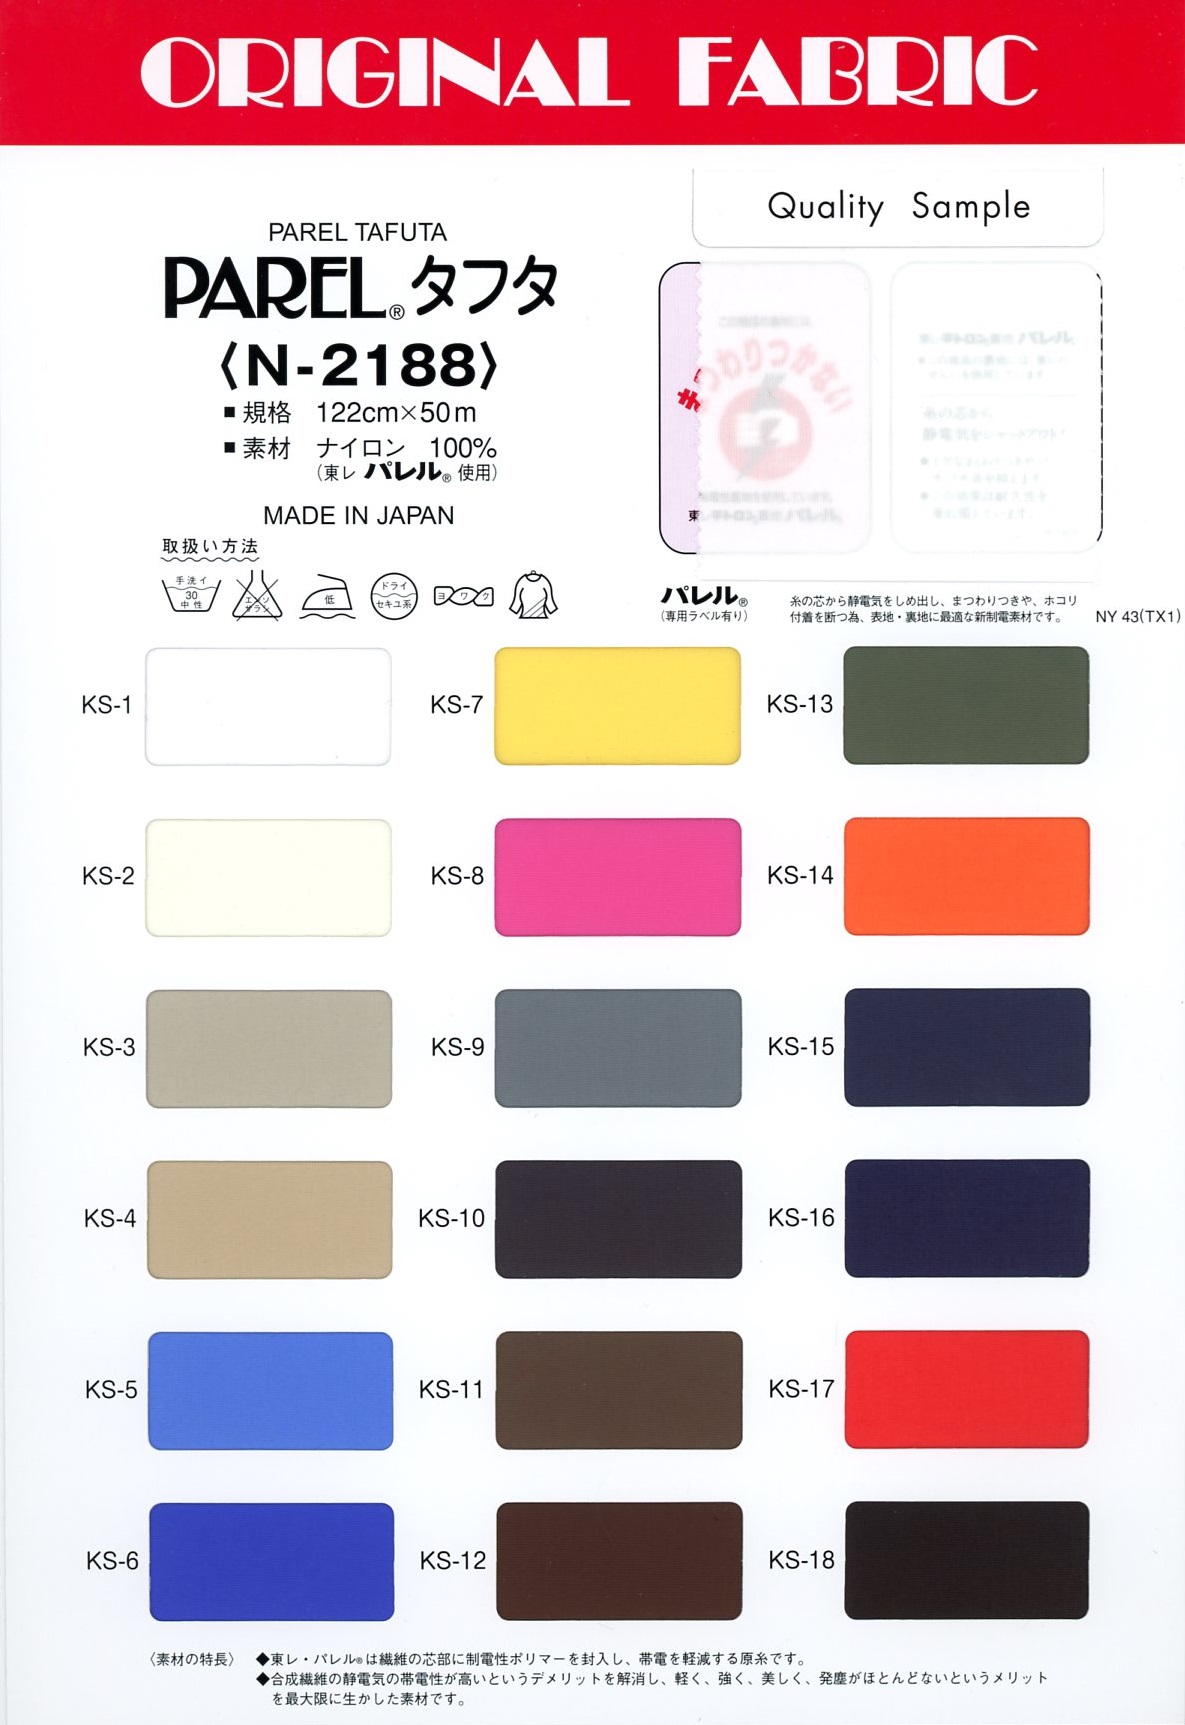 N-2188 Taffetas PAREL®[Fabrication De Textile] Masuda